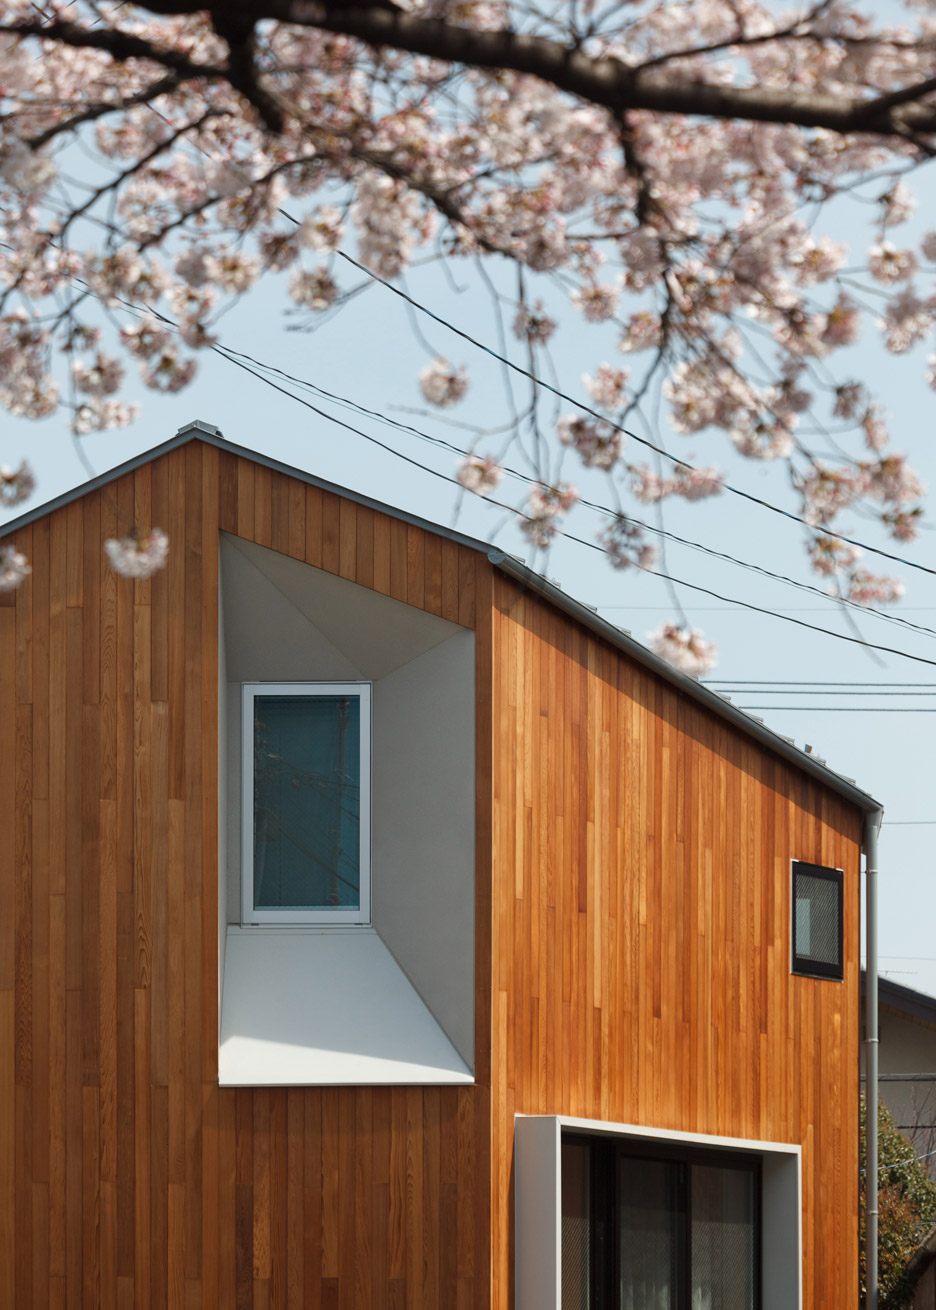 u-house-atelier-kukka-tokyo-japan-architecture-residentialdezeen9368-15838267841301096980108.jpg